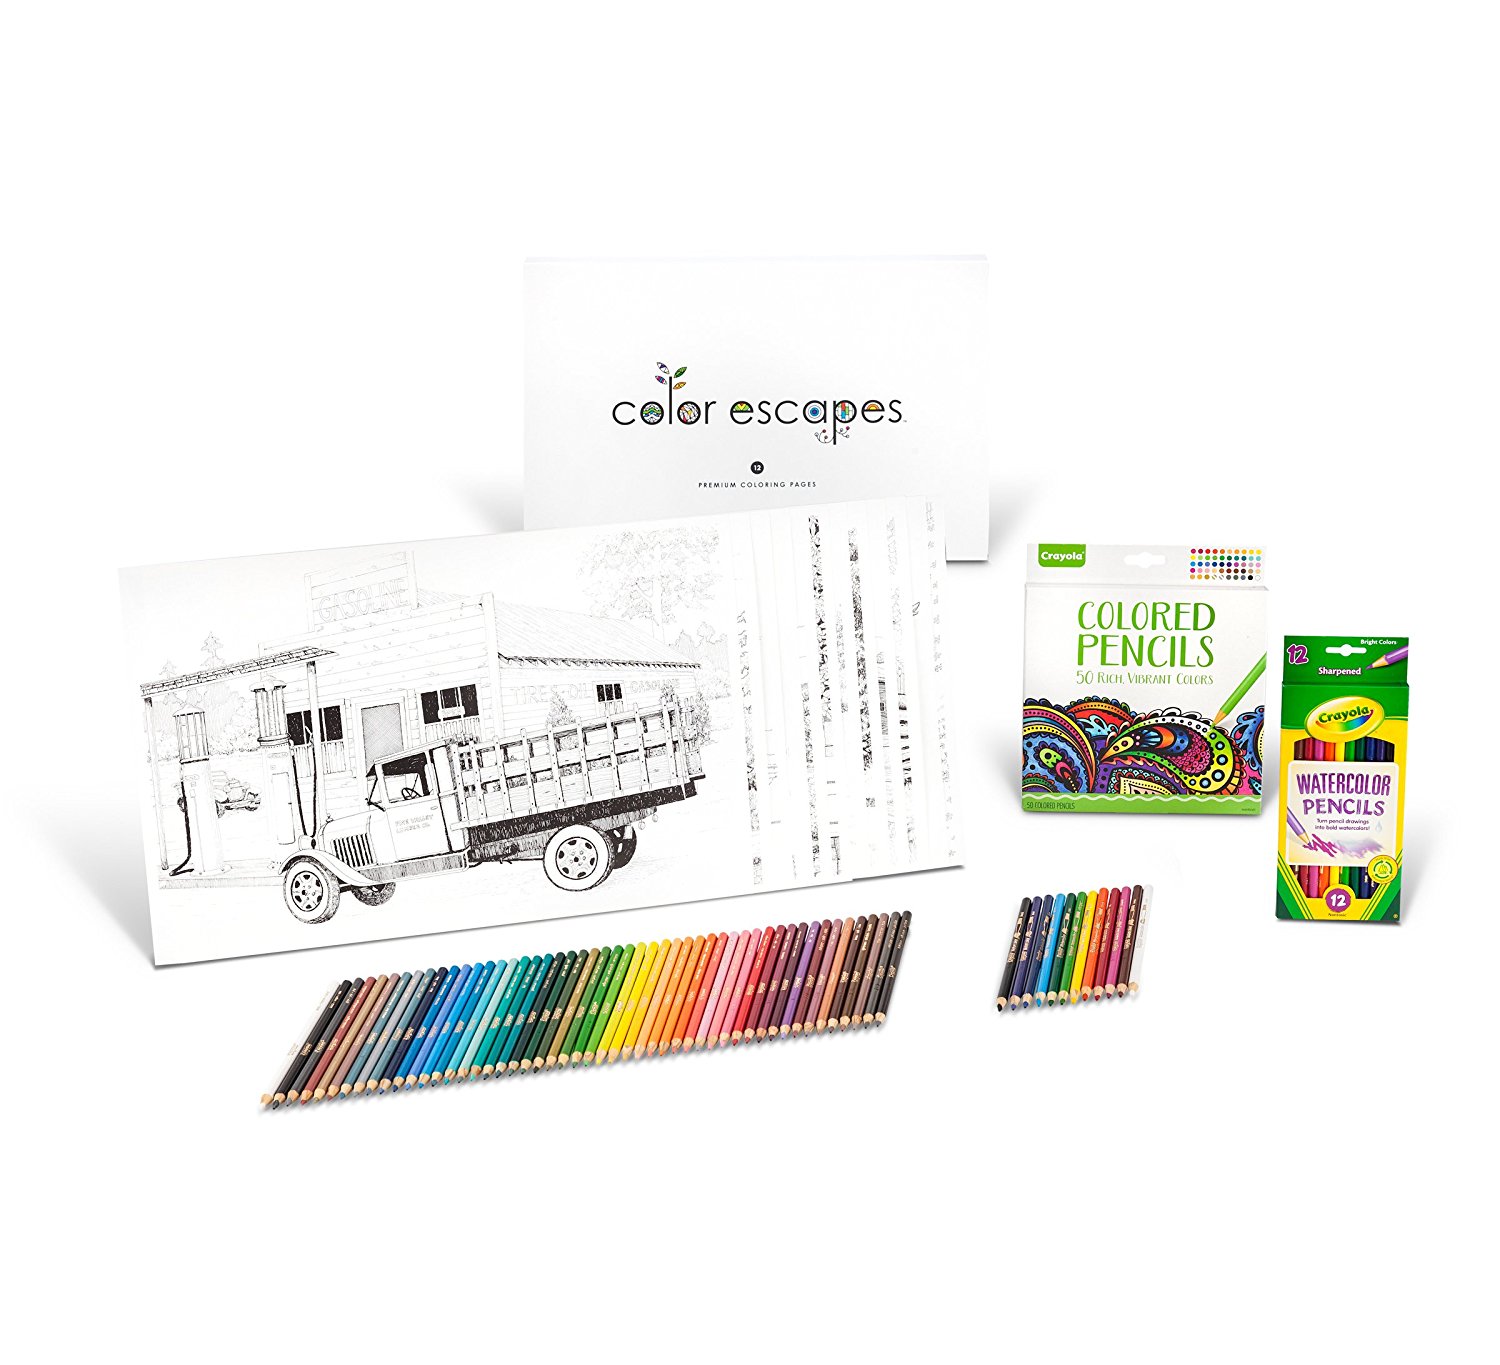 Crayola Color Escapes Americana Edition Coloring Pages & Pencil Kit – Just $6.07!